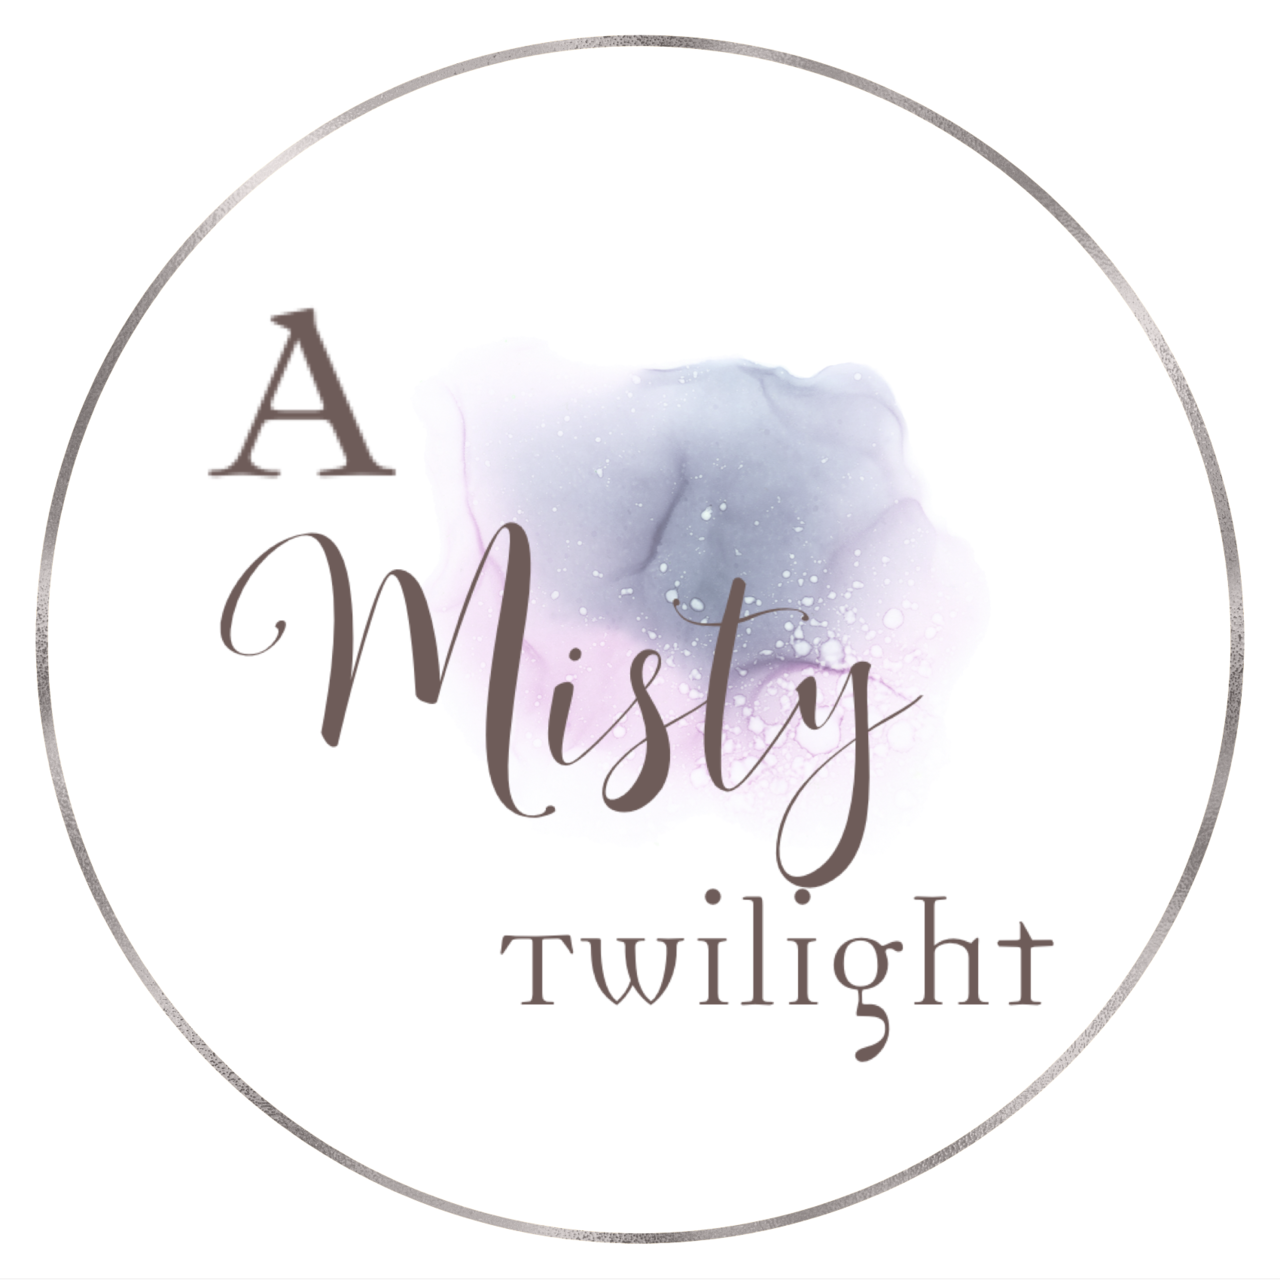 A Misty Twilight